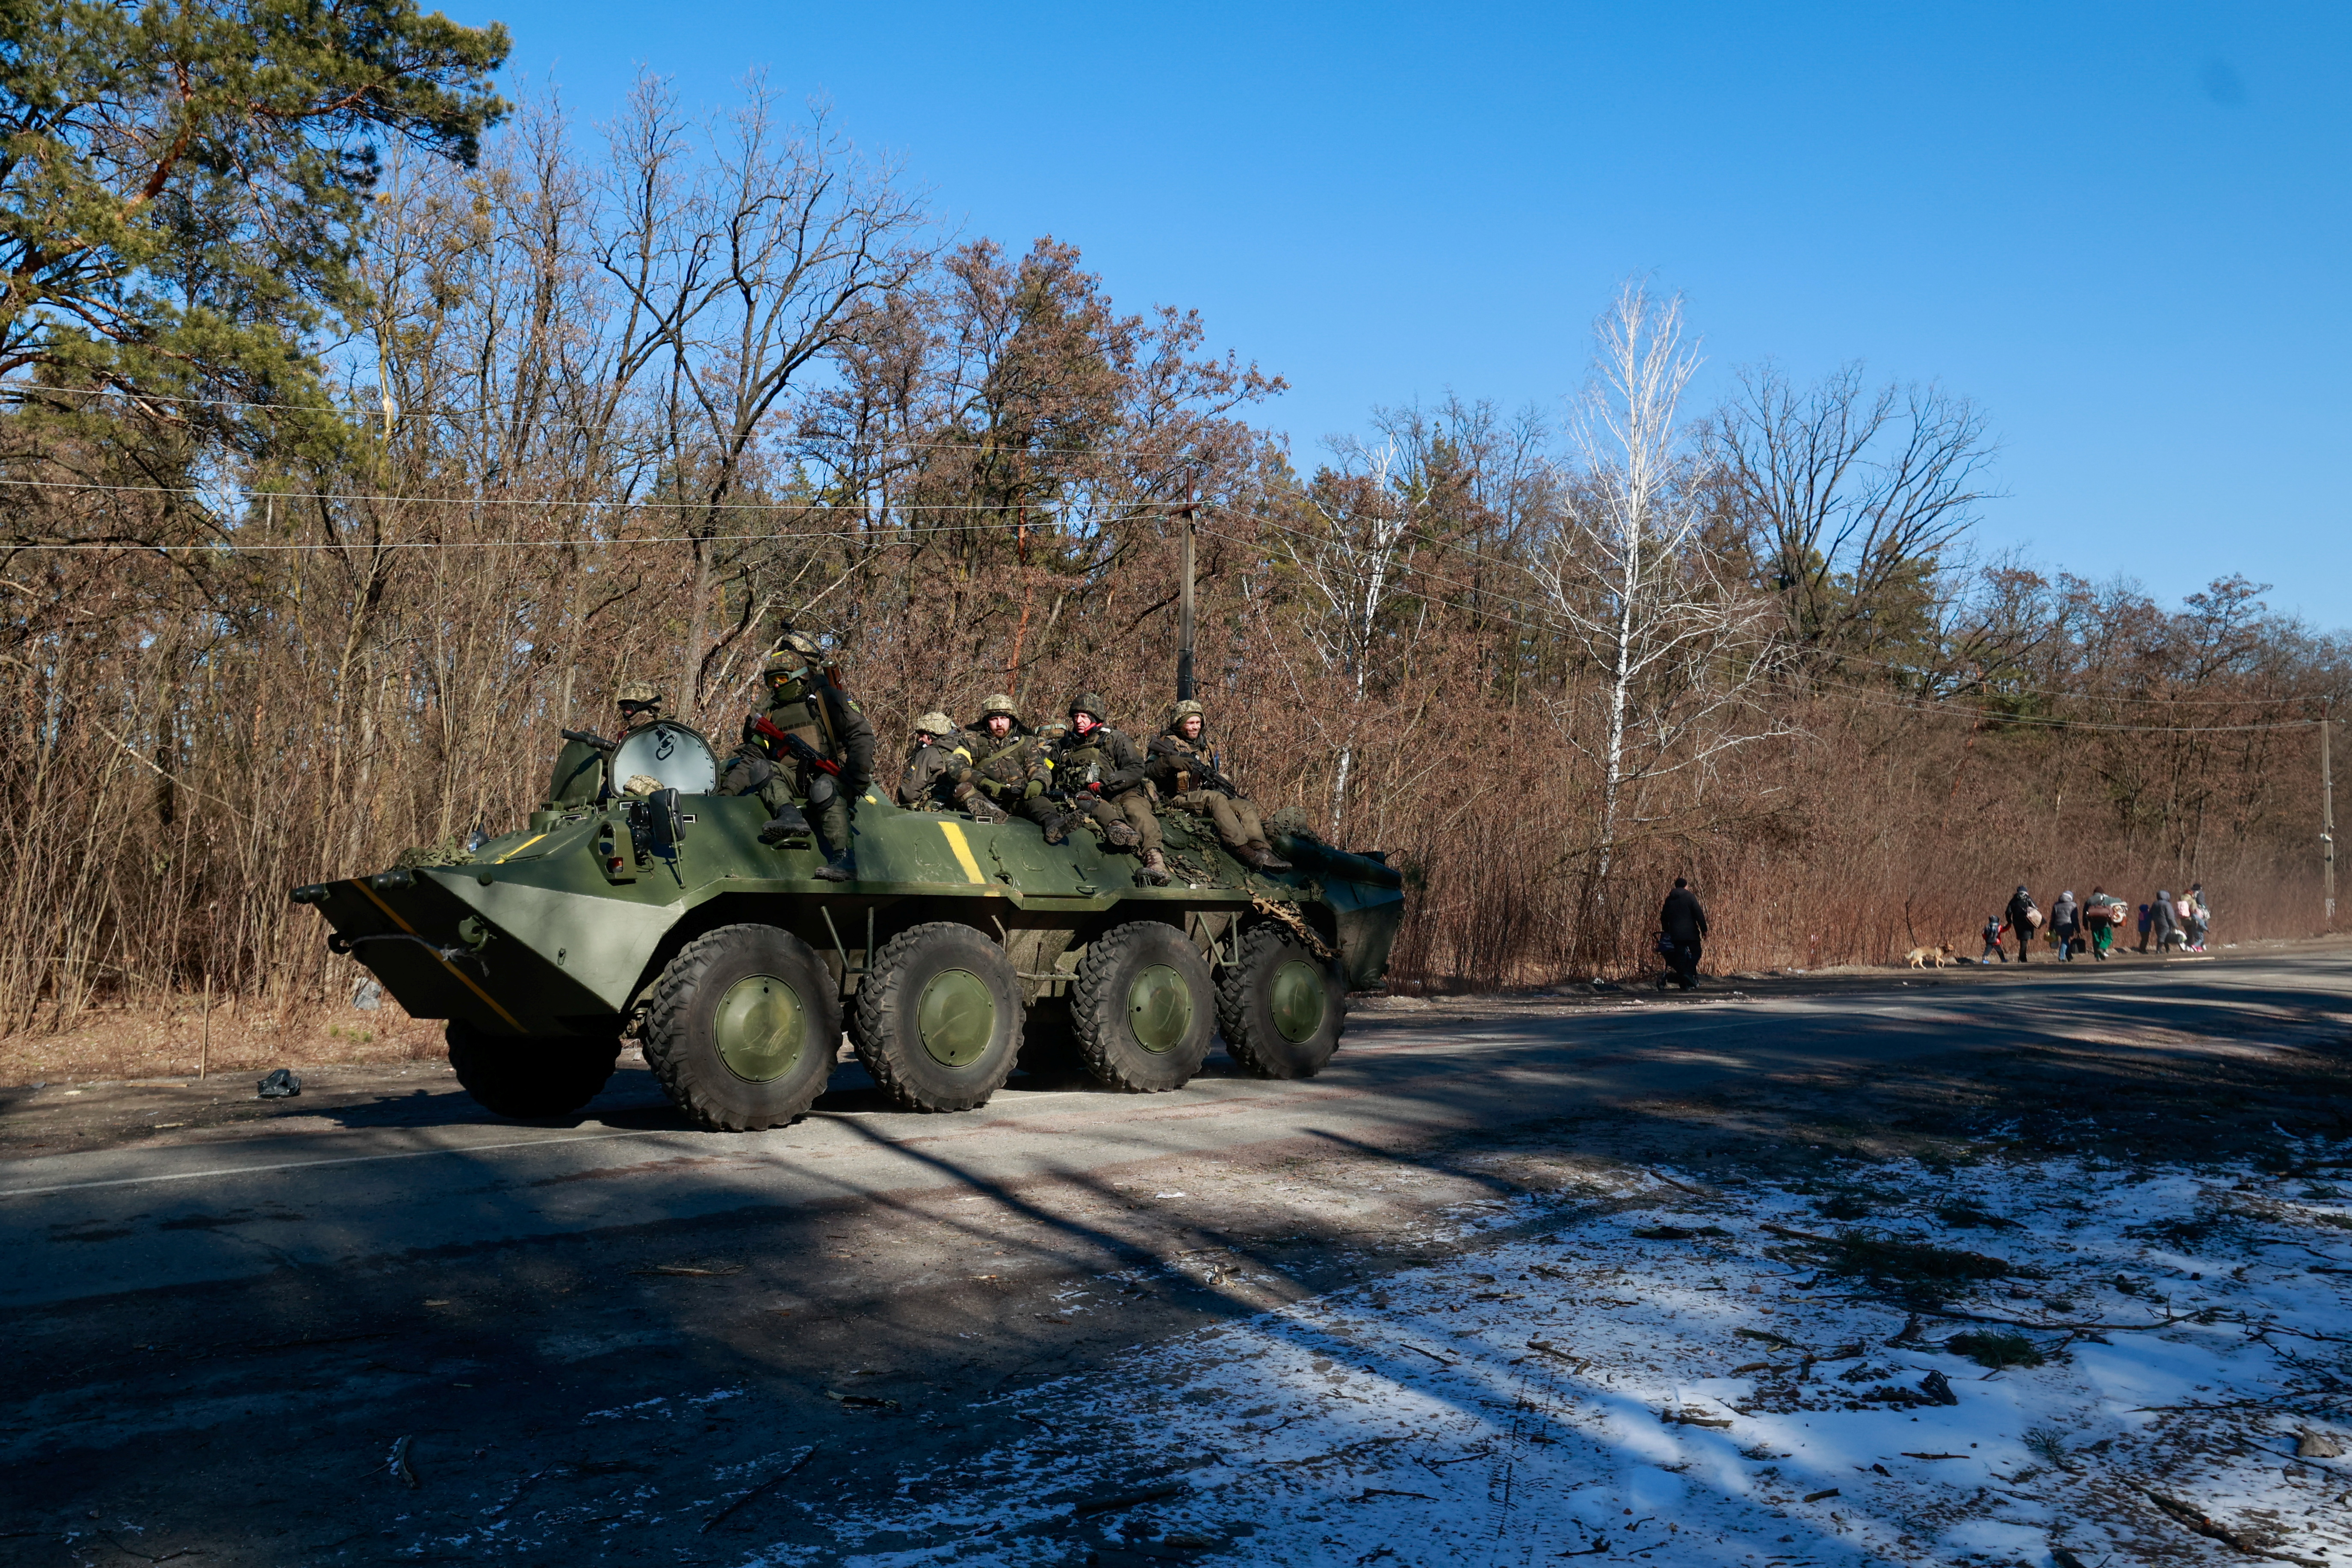 Russia's invasion of Ukraine continues, in the Vyshgorod region near Kyiv